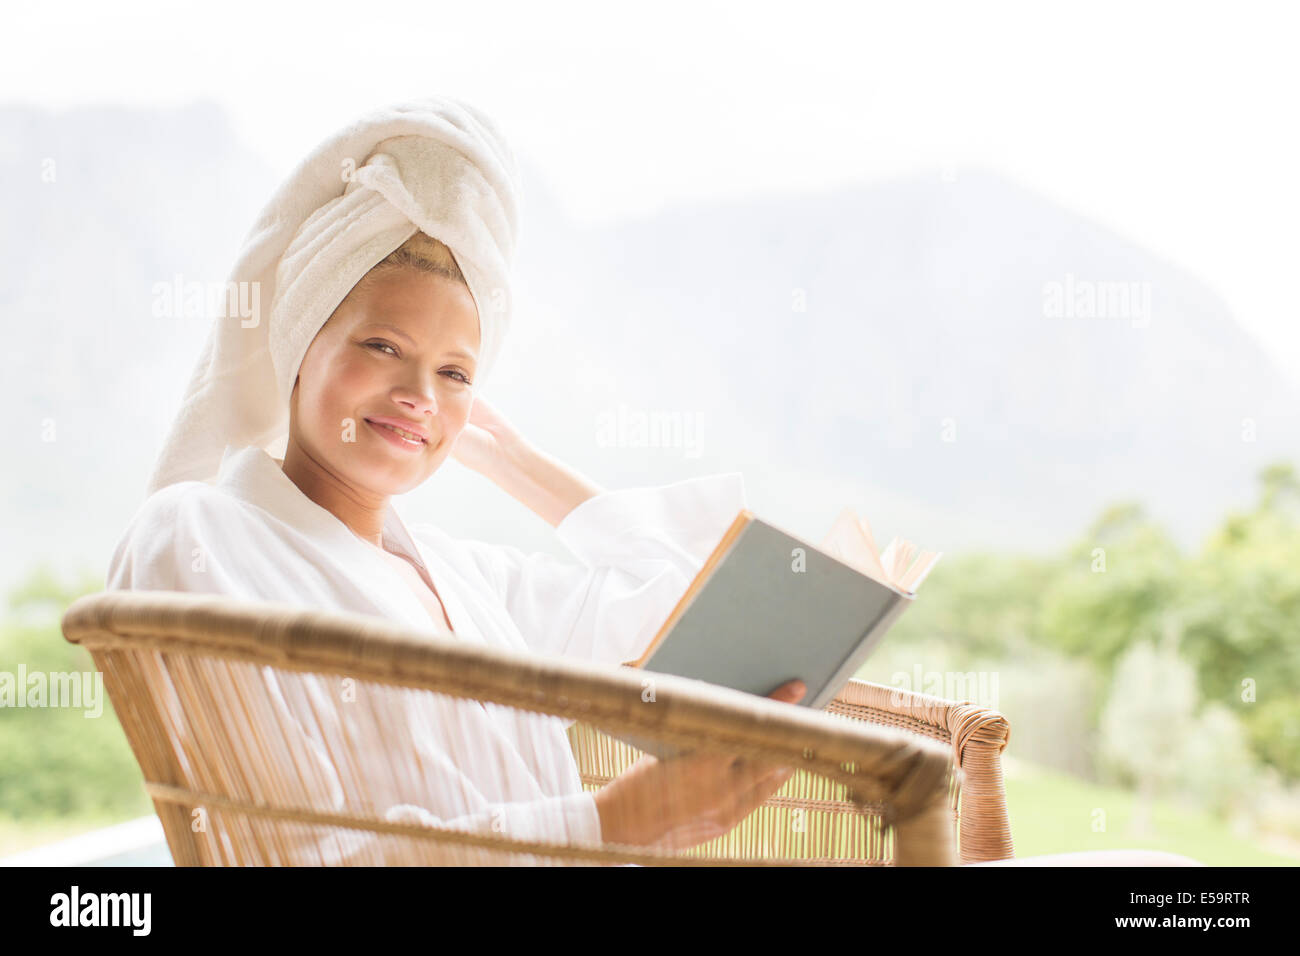 Woman in bathrobe reading outdoors Stock Photo